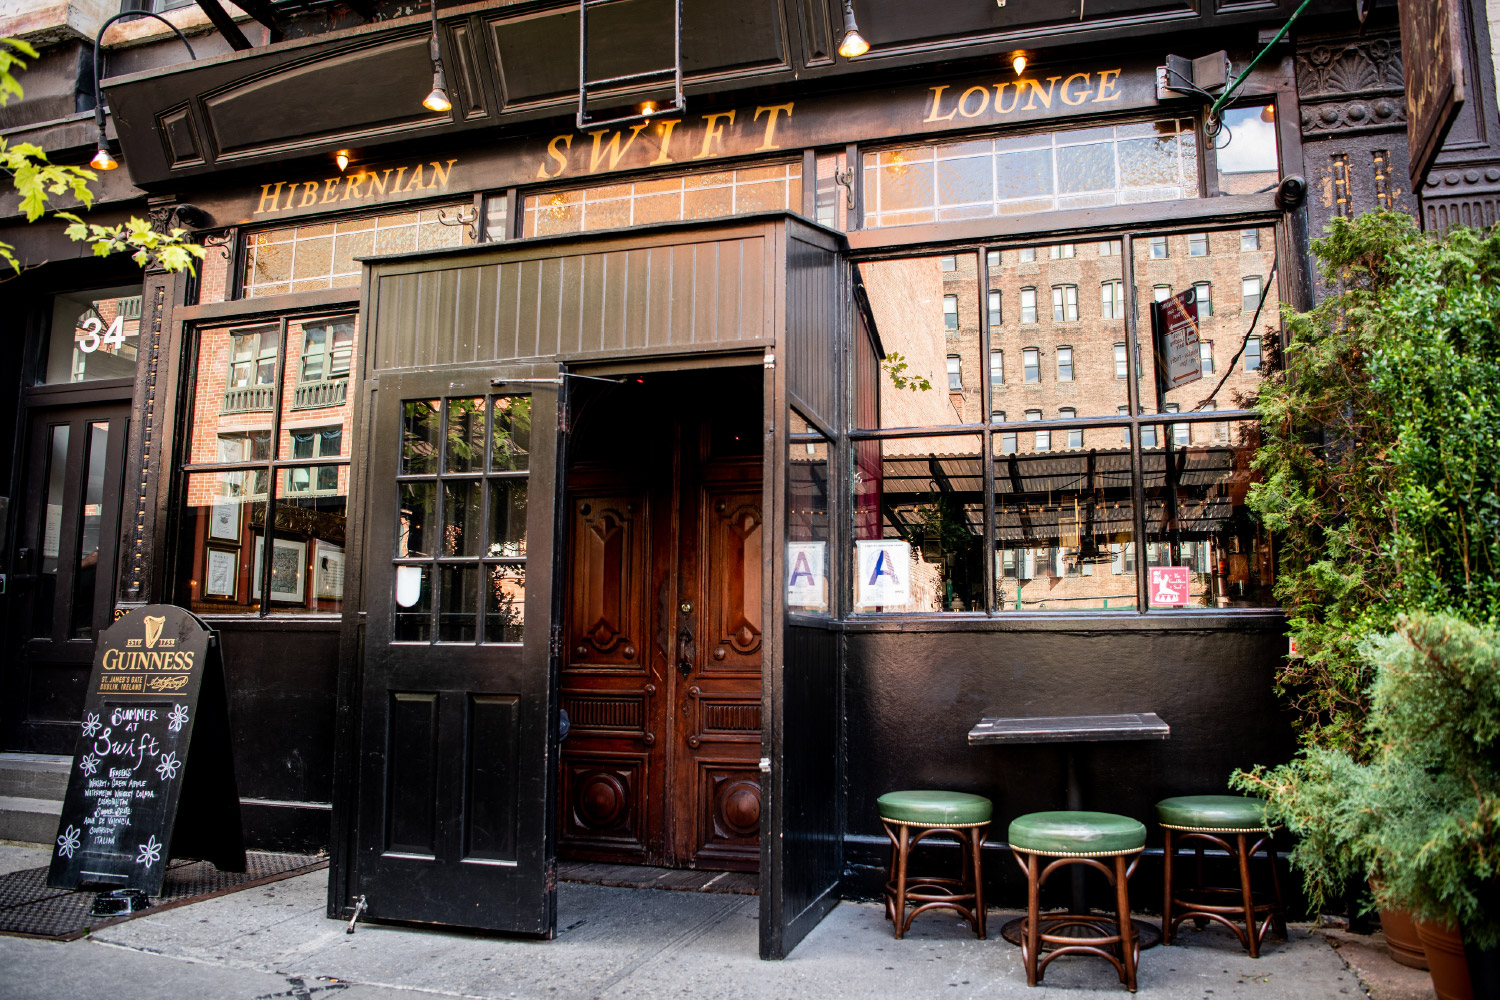 Swift Hibernian Lounge in New York City